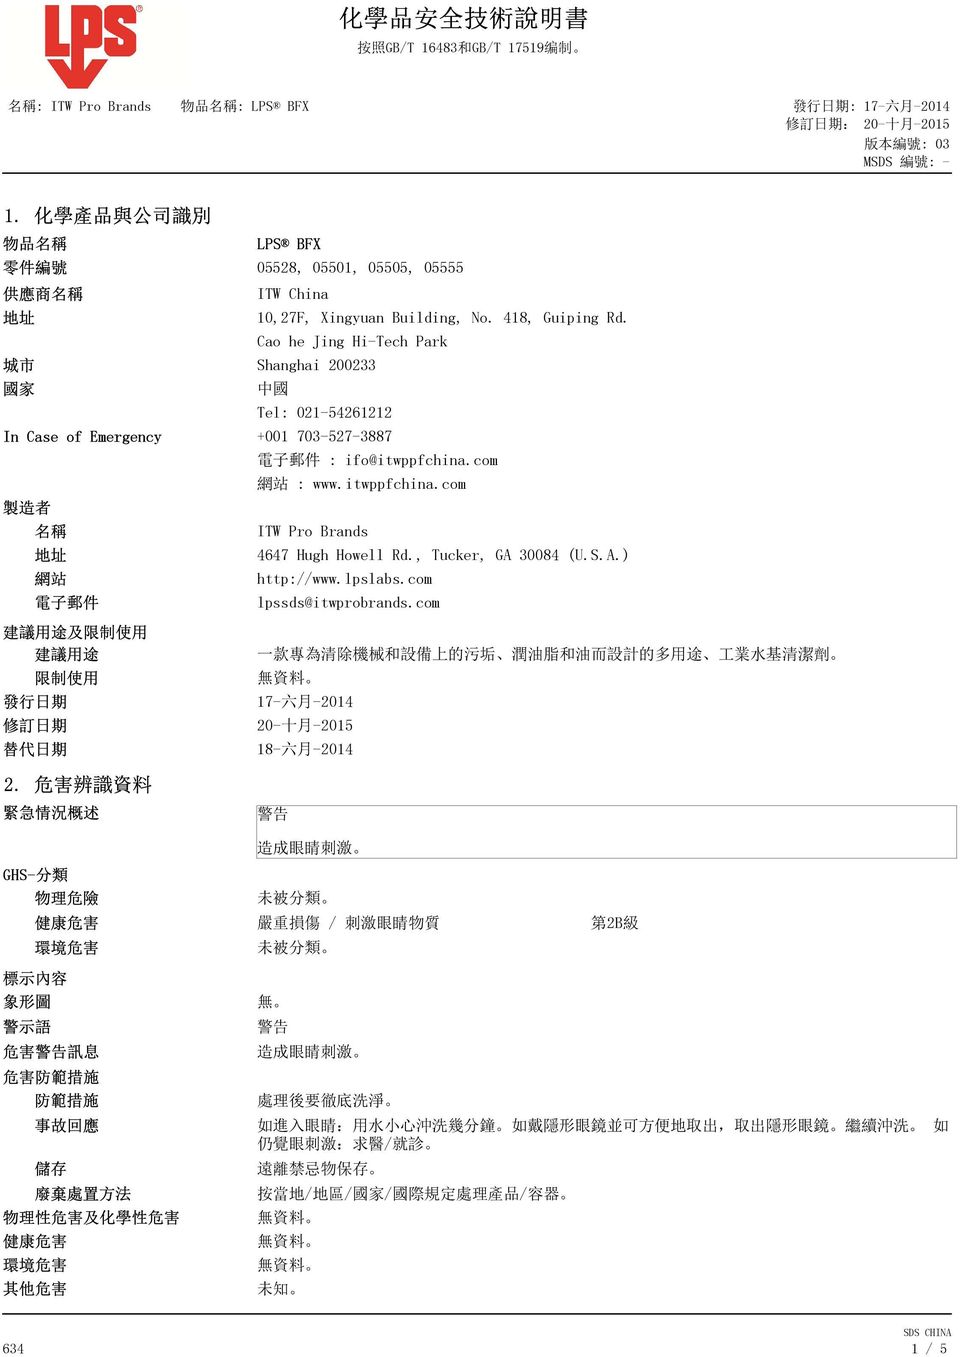 Cao he Jing Hi-Tech Park 城 市 Shanghai 200233 國 家 中 國 Tel: 021-54261212 In Case of Emergency +001 703-527-3887 製 造 者 名 稱 地 址 網 站 電 子 郵 件 建 議 用 途 及 限 制 使 用 建 議 用 途 限 制 使 用 發 行 日 期 修 訂 日 期 替 代 日 期 2.